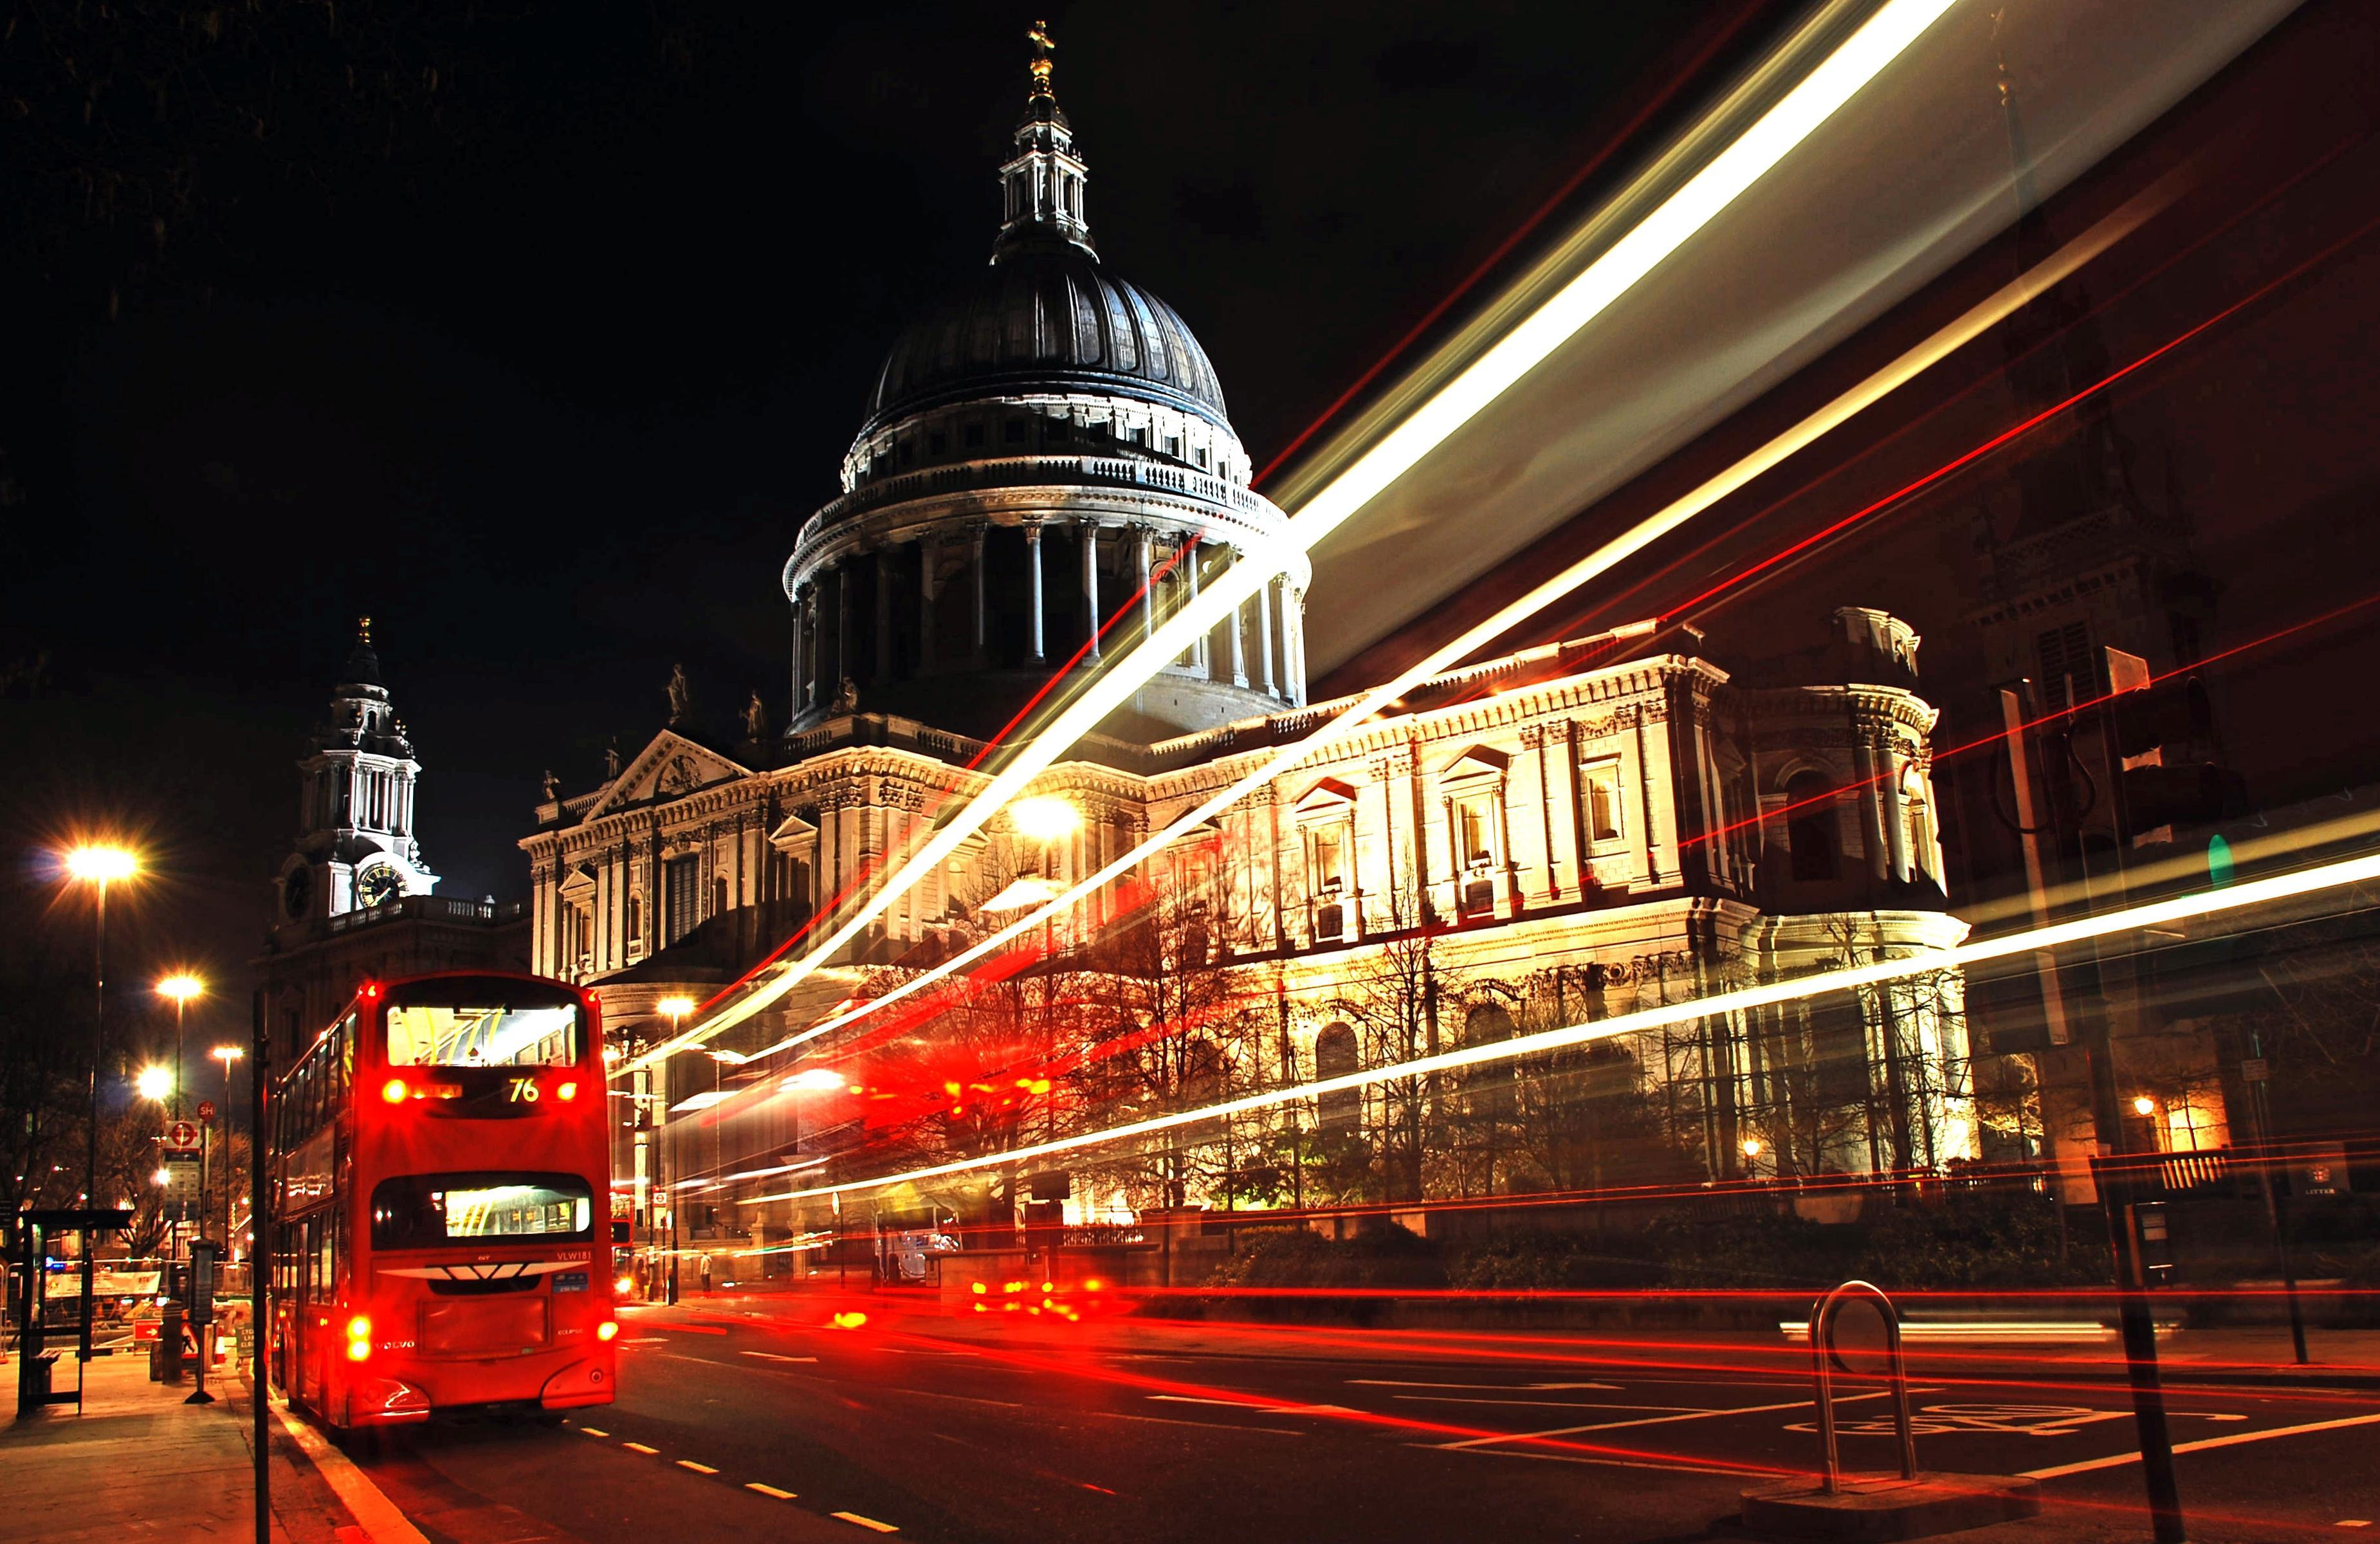 Download wallpaper 3700x2400 london, city, bus, night HD background